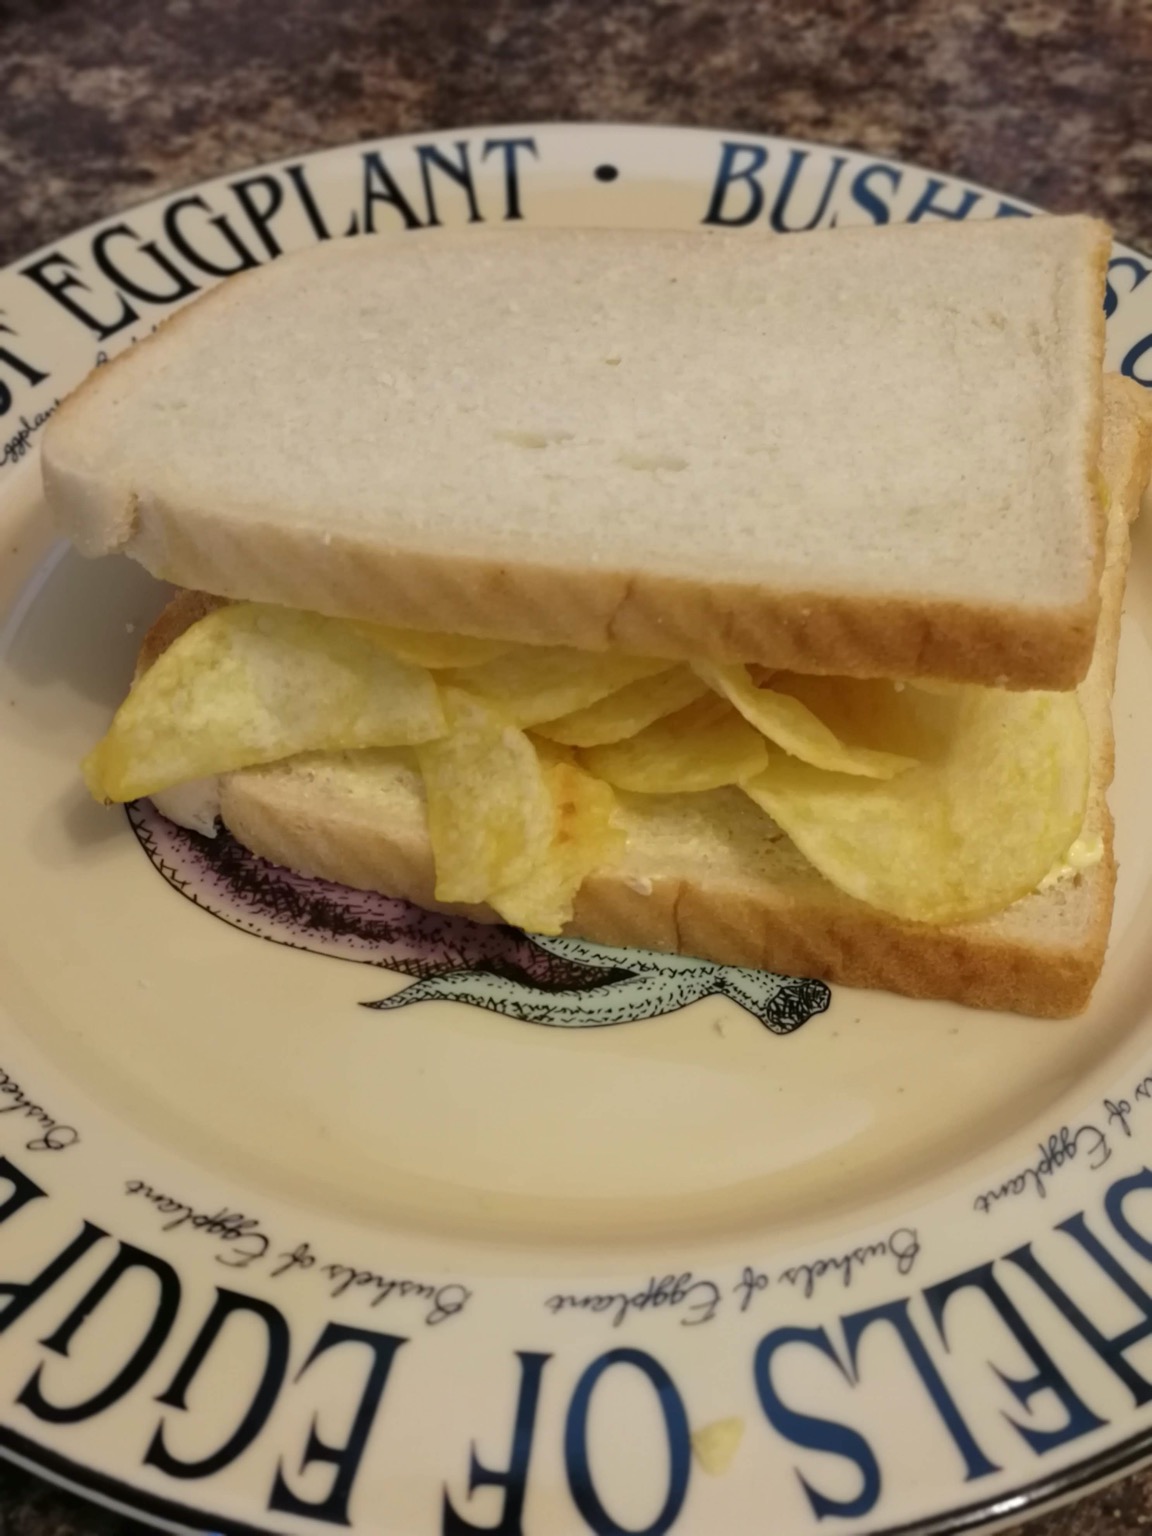 White potato crisp sandwich on a decorative plate